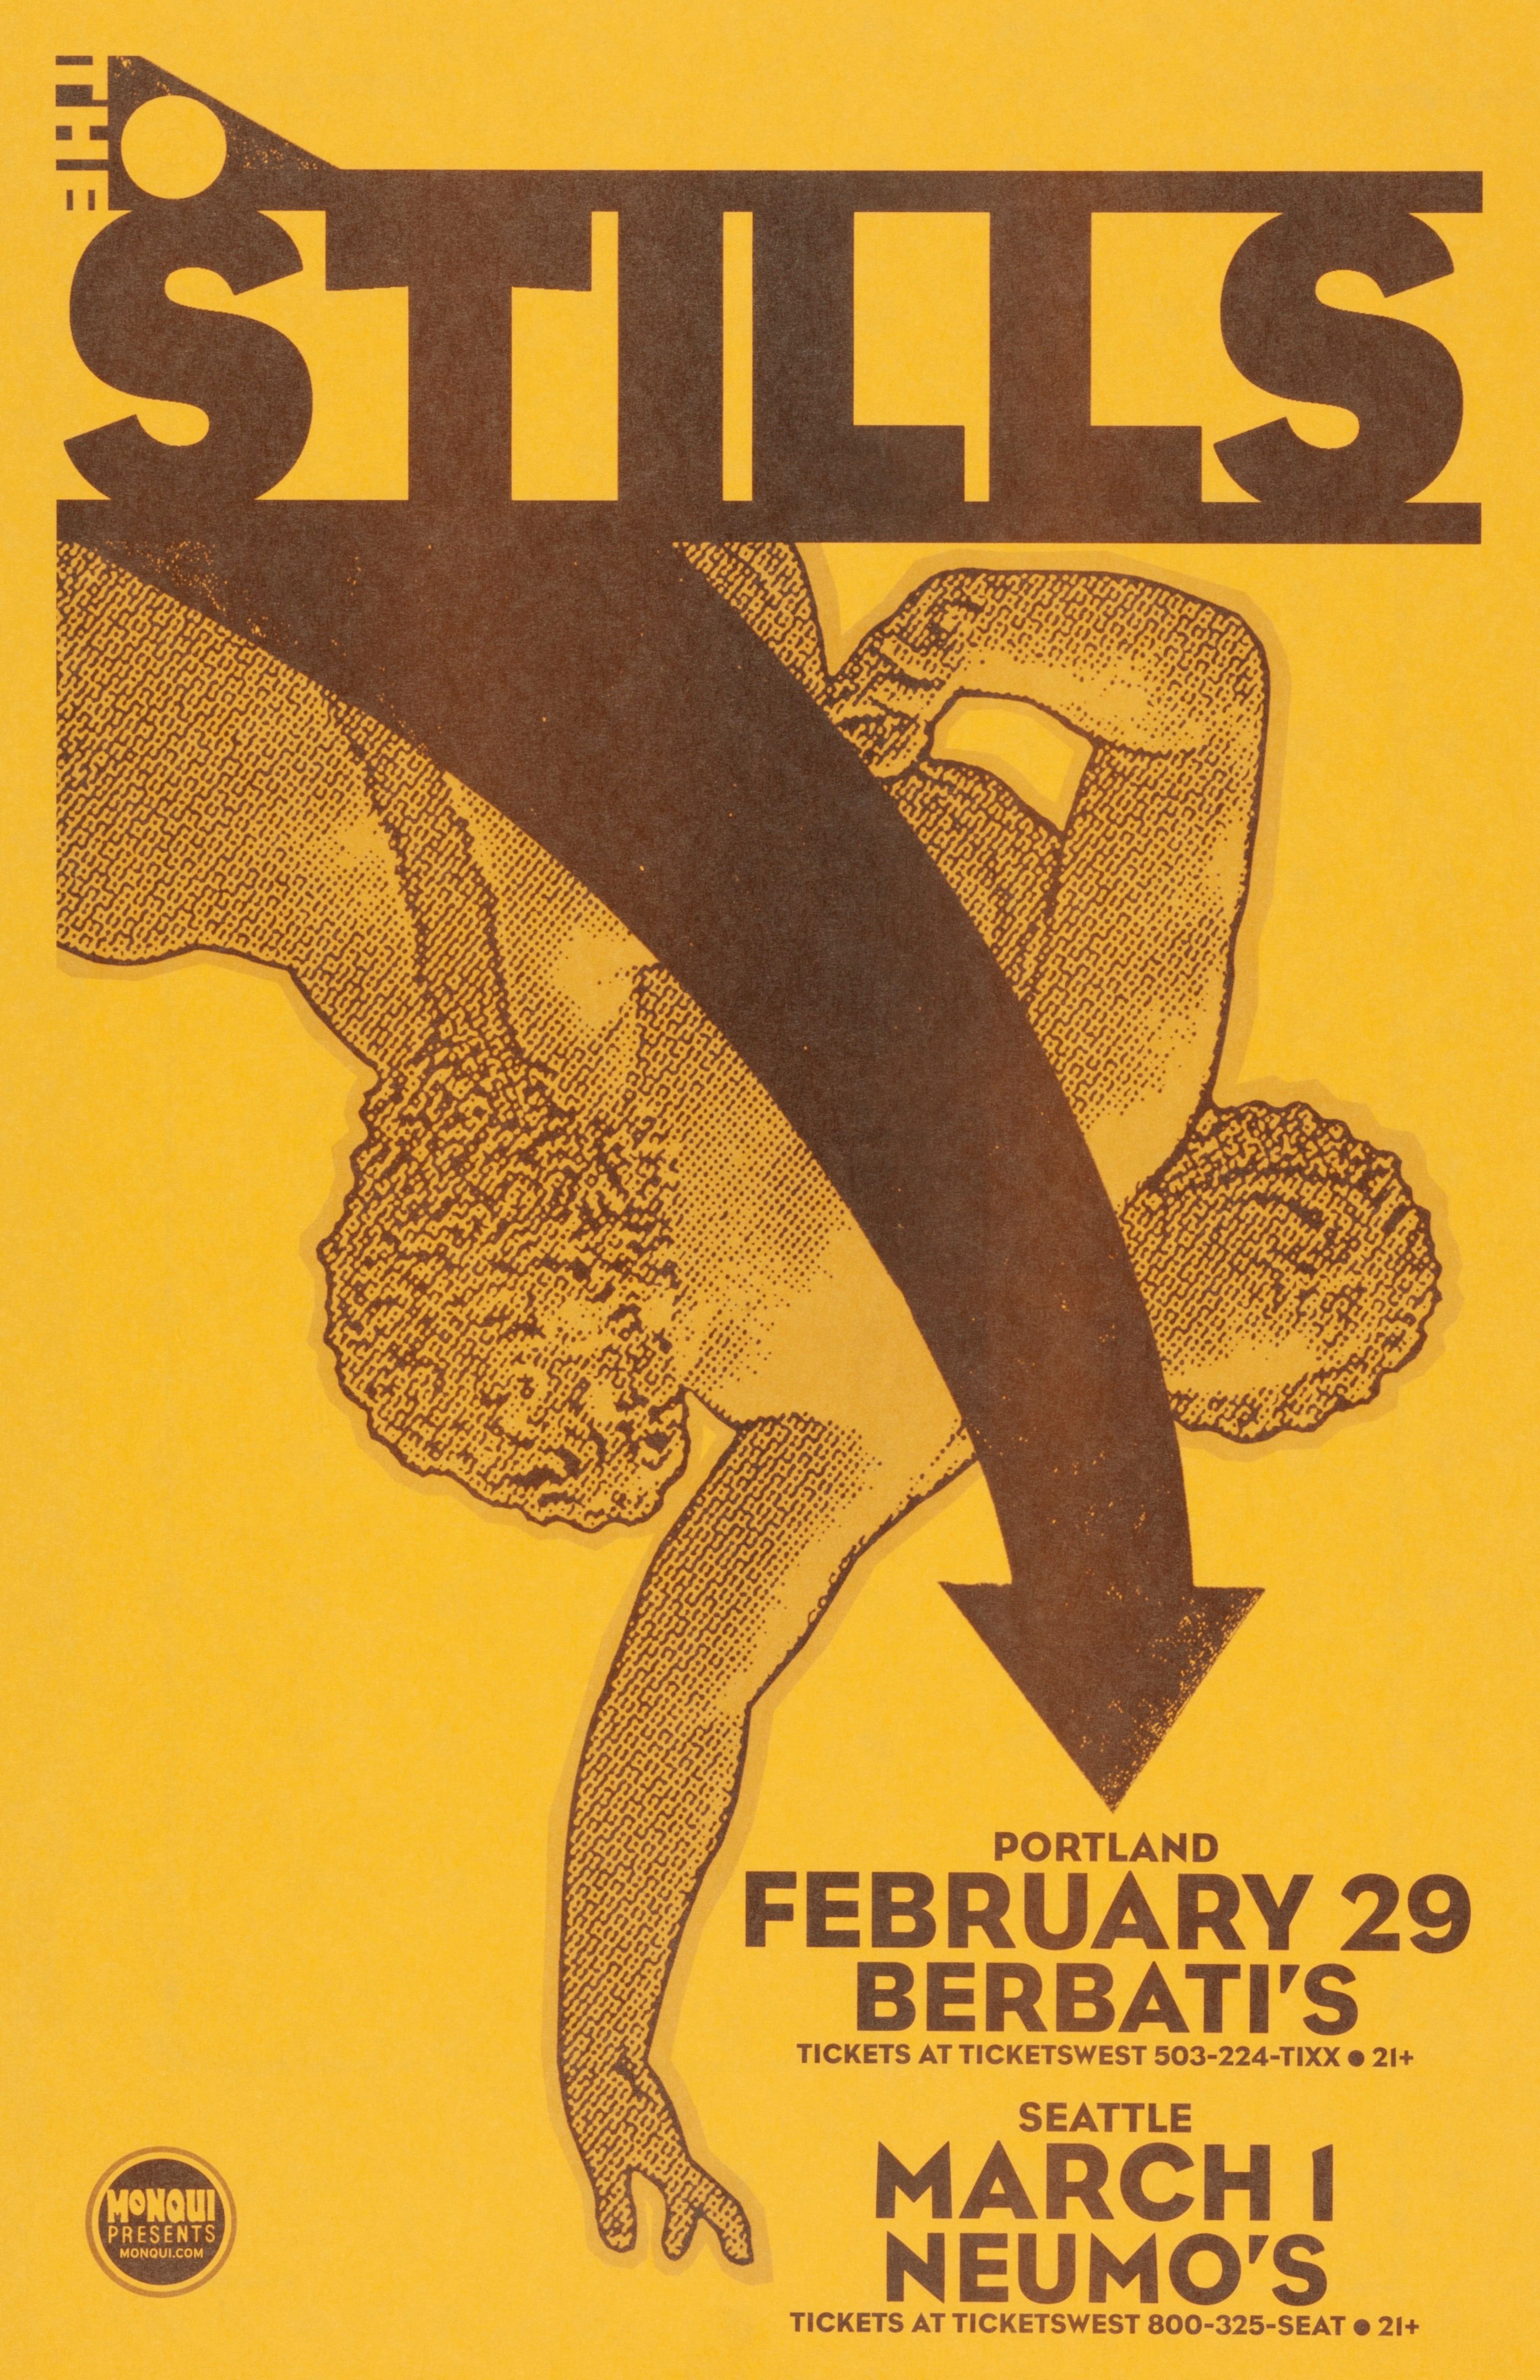 MXP-157.4 The Stills Berbati's & Neumos 2004 Concert Poster